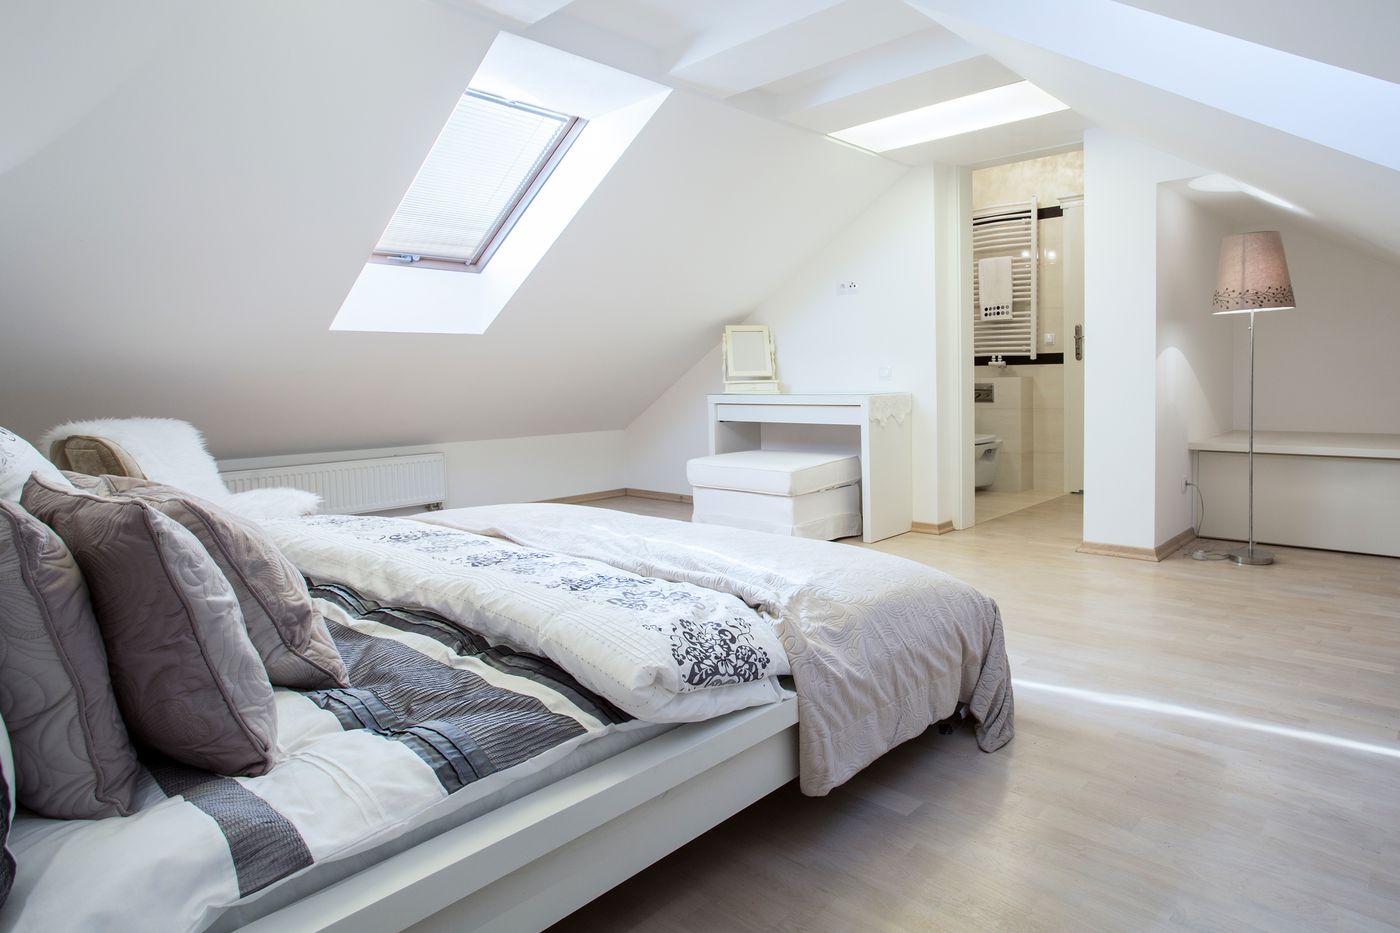 A Cozy Attic Bedroom   20 Fabulous Attic Bedroom Ideas